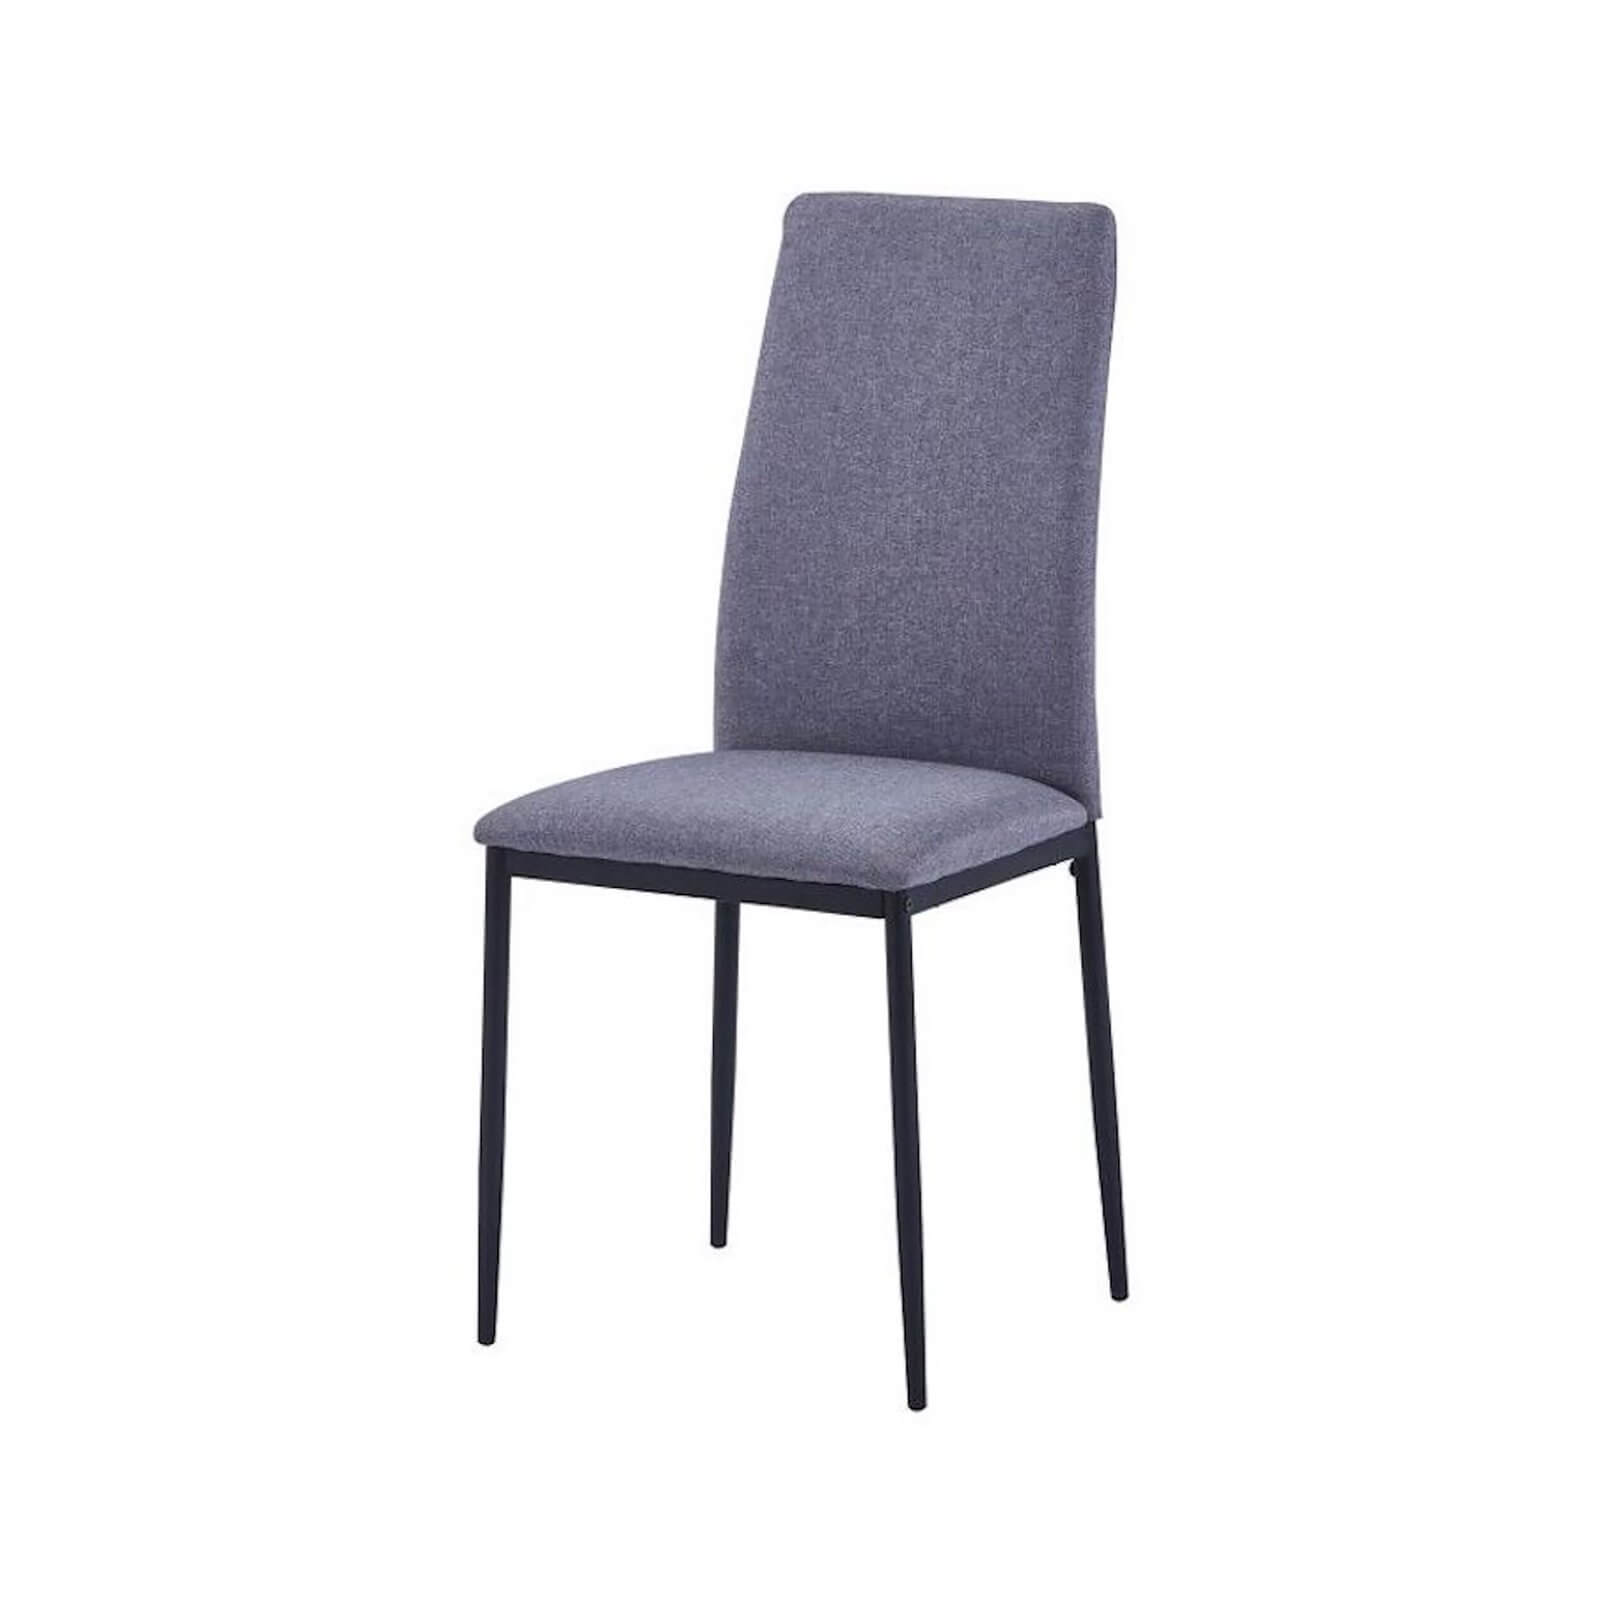 Elton Dining Chairs - Set of 2 - Grey